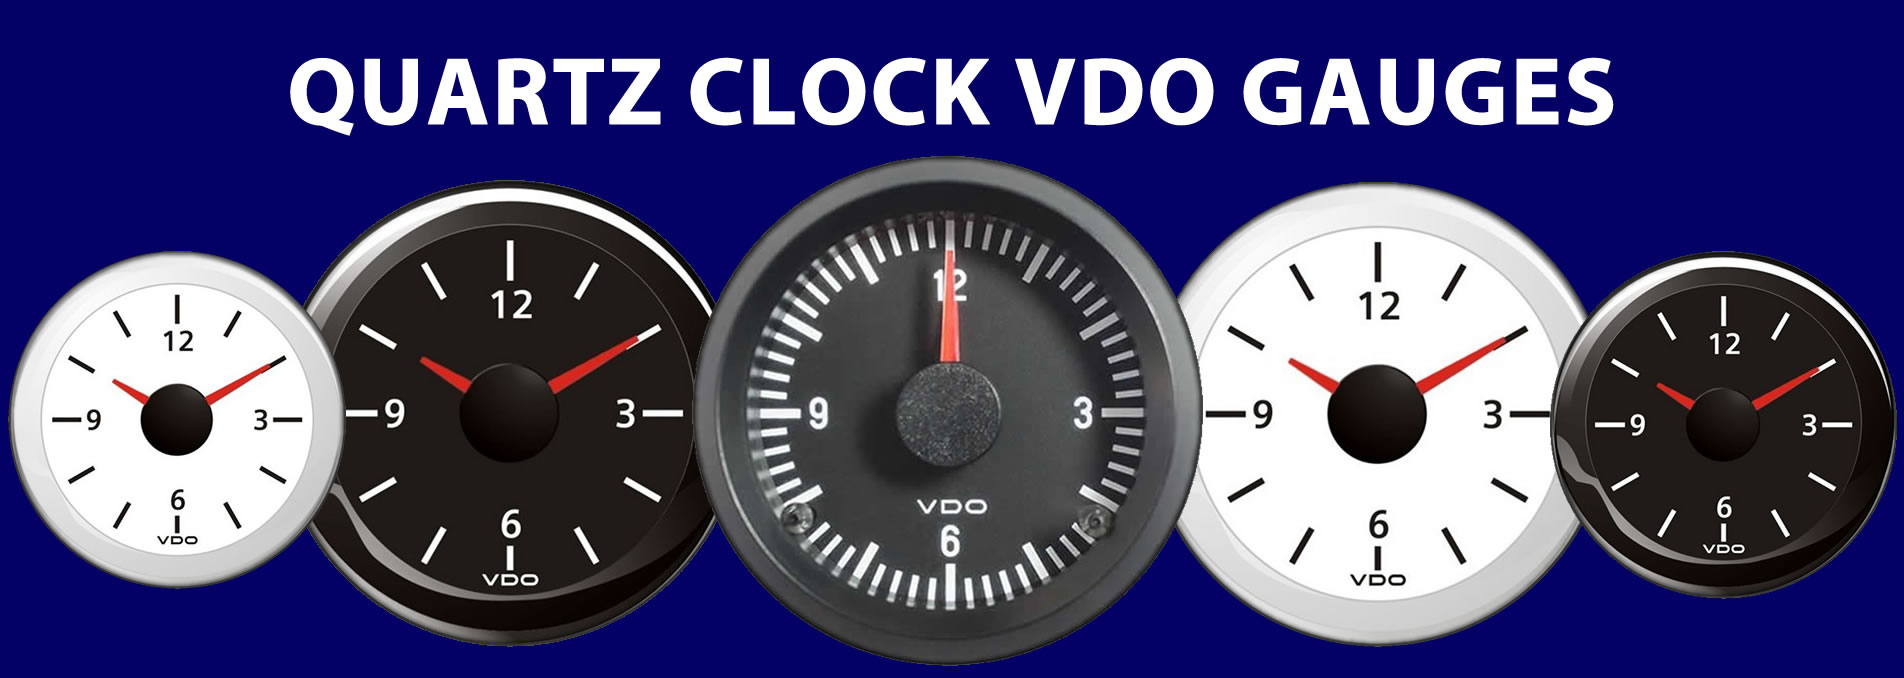 vdo Quartz clock gauges banner